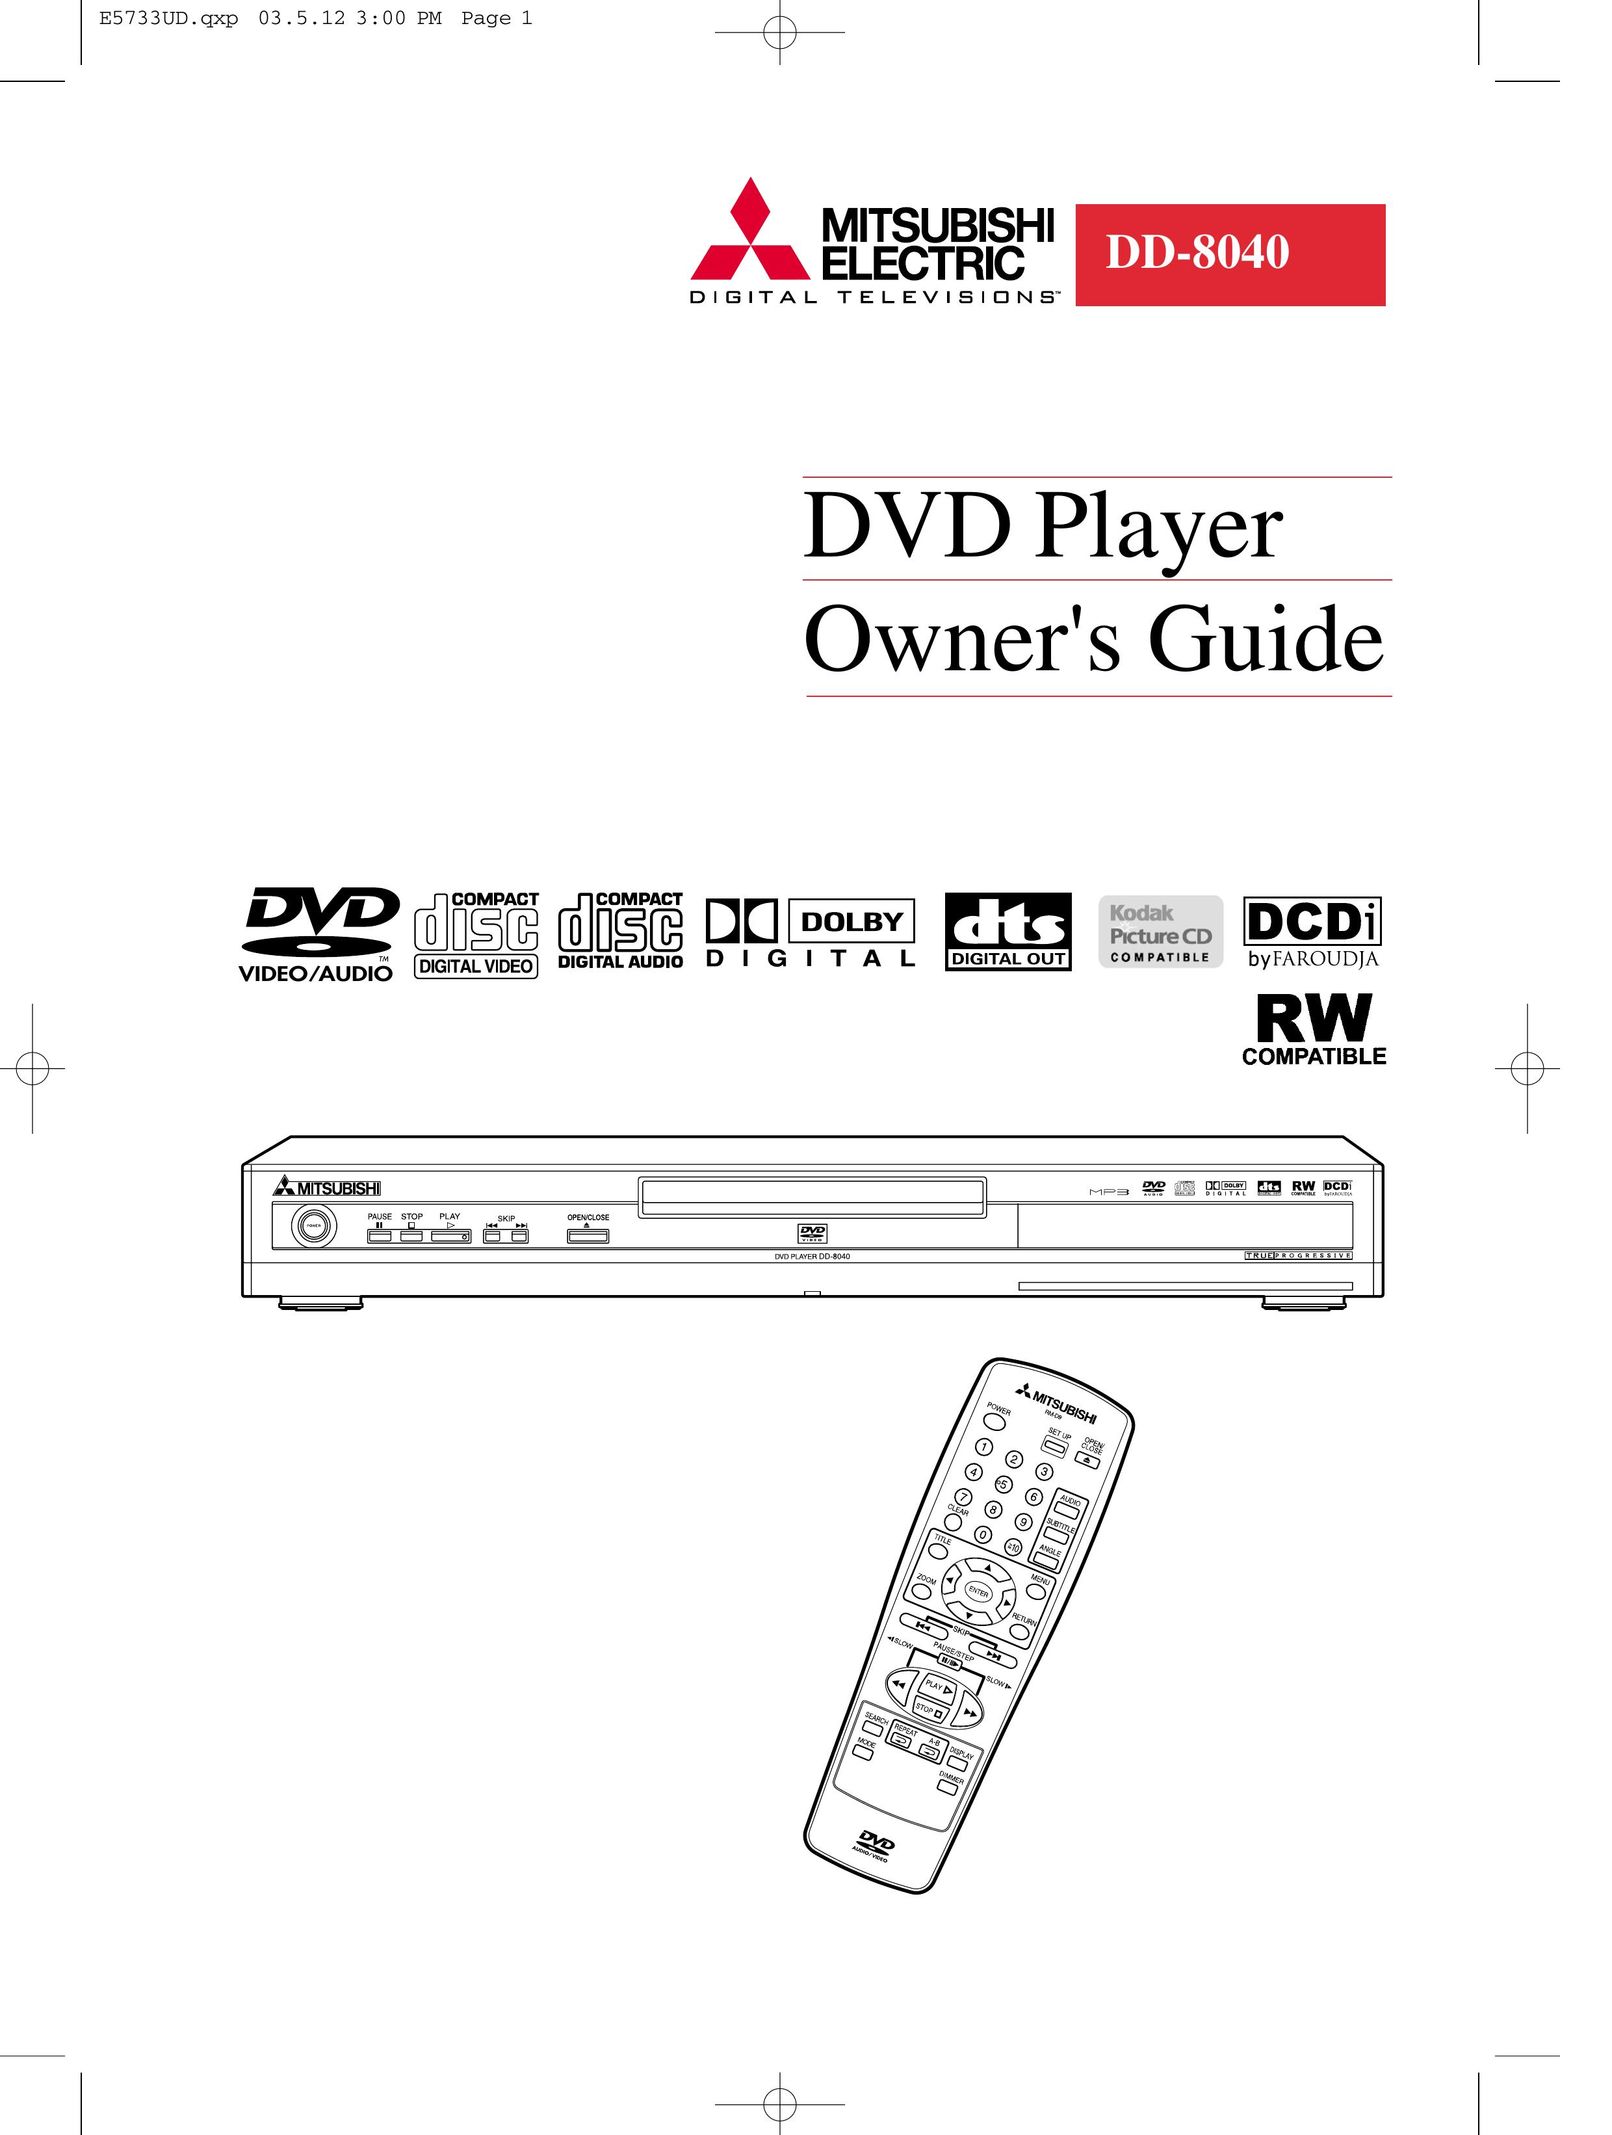 Mitsubishi Electronics DD-8040 DVD Player User Manual